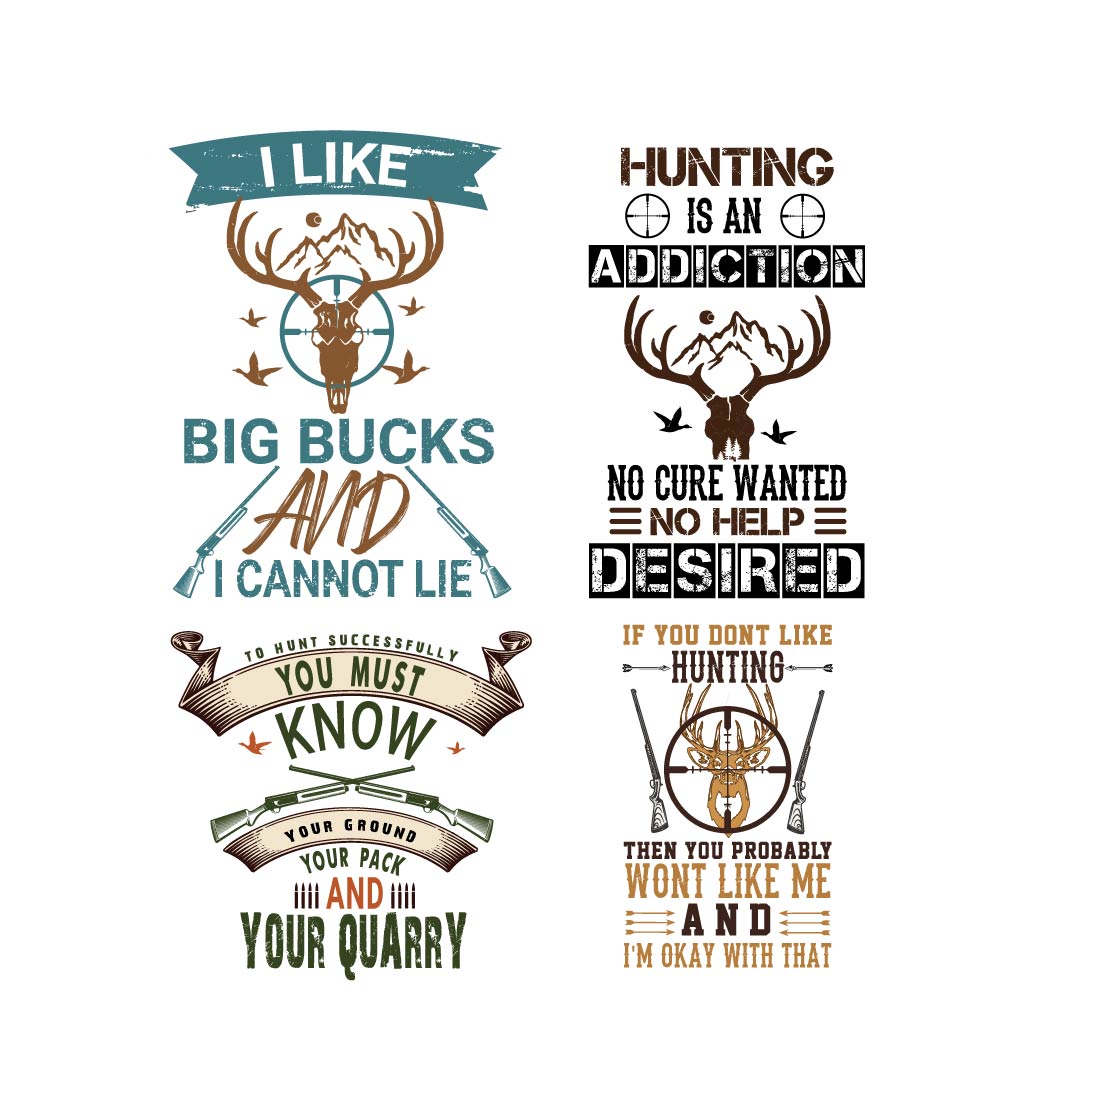 Hunting SVG | Hunting Life SVG | Hunter SVG | Hunting Cut File | Hunting Quote Svg | Hunting Saying | Deer Hunting Svg | Hunting Season cover image.